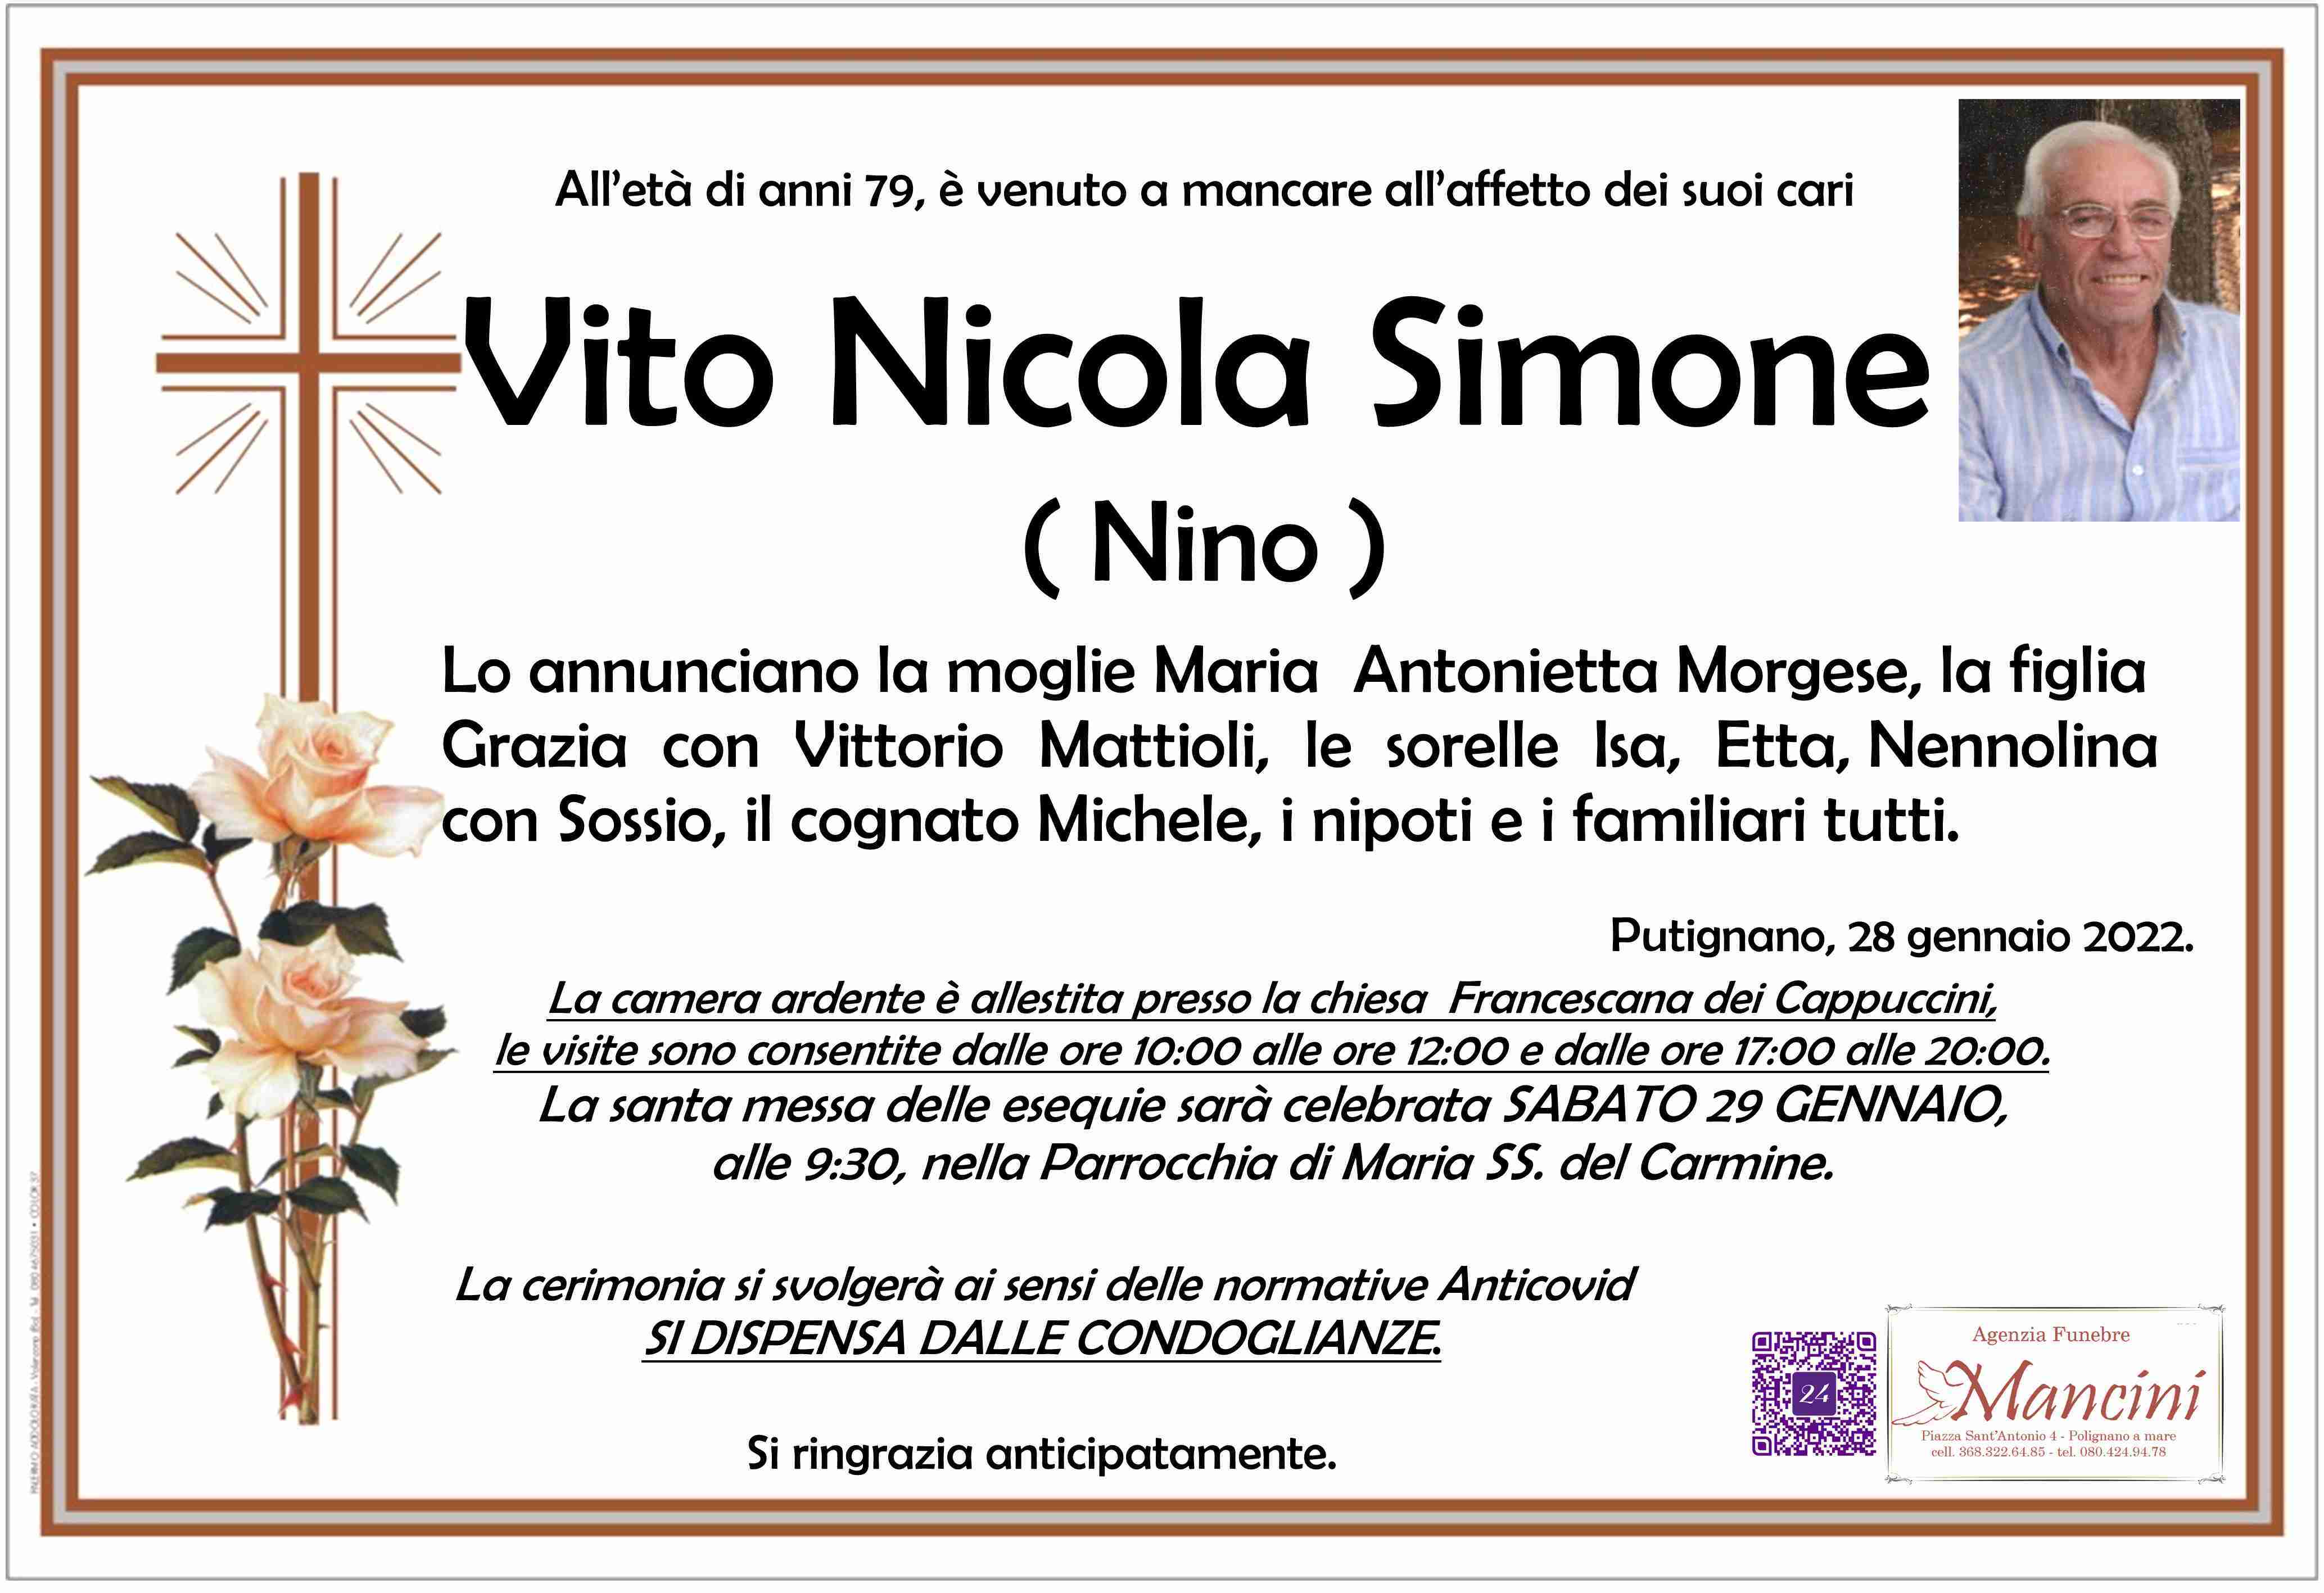 Vito Nicola Simone